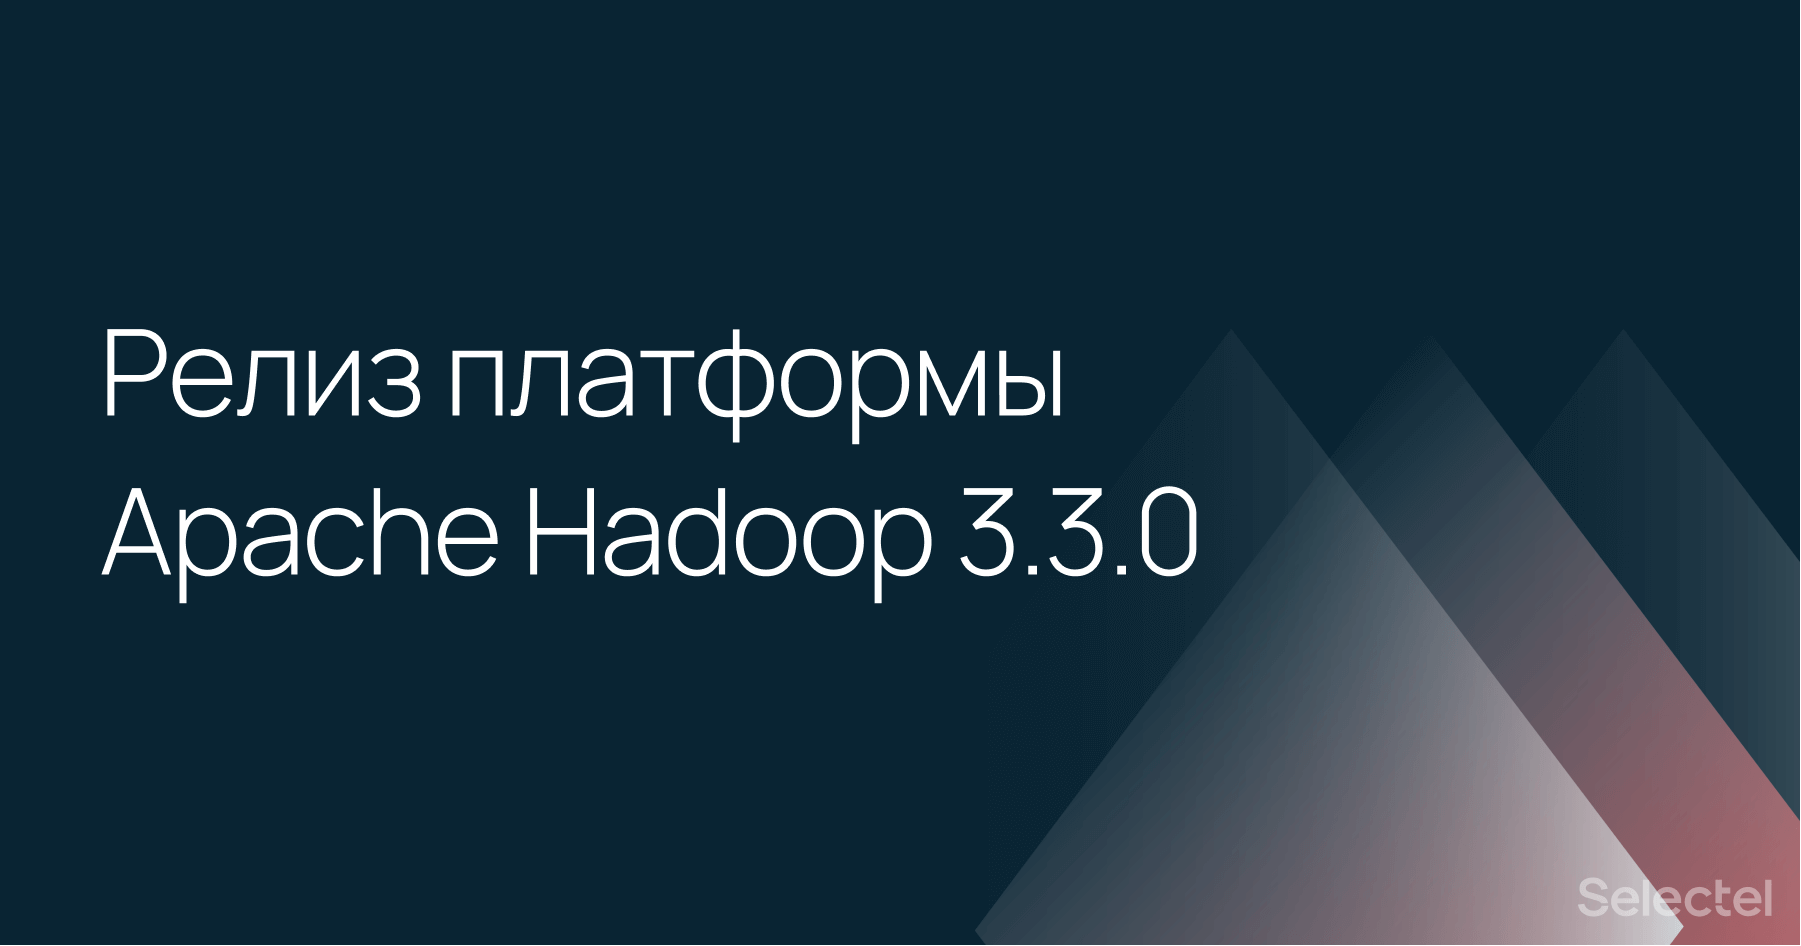 Apache Software Foundation опубликовала релиз платформы Apache Hadoop 3.3.0 - 1